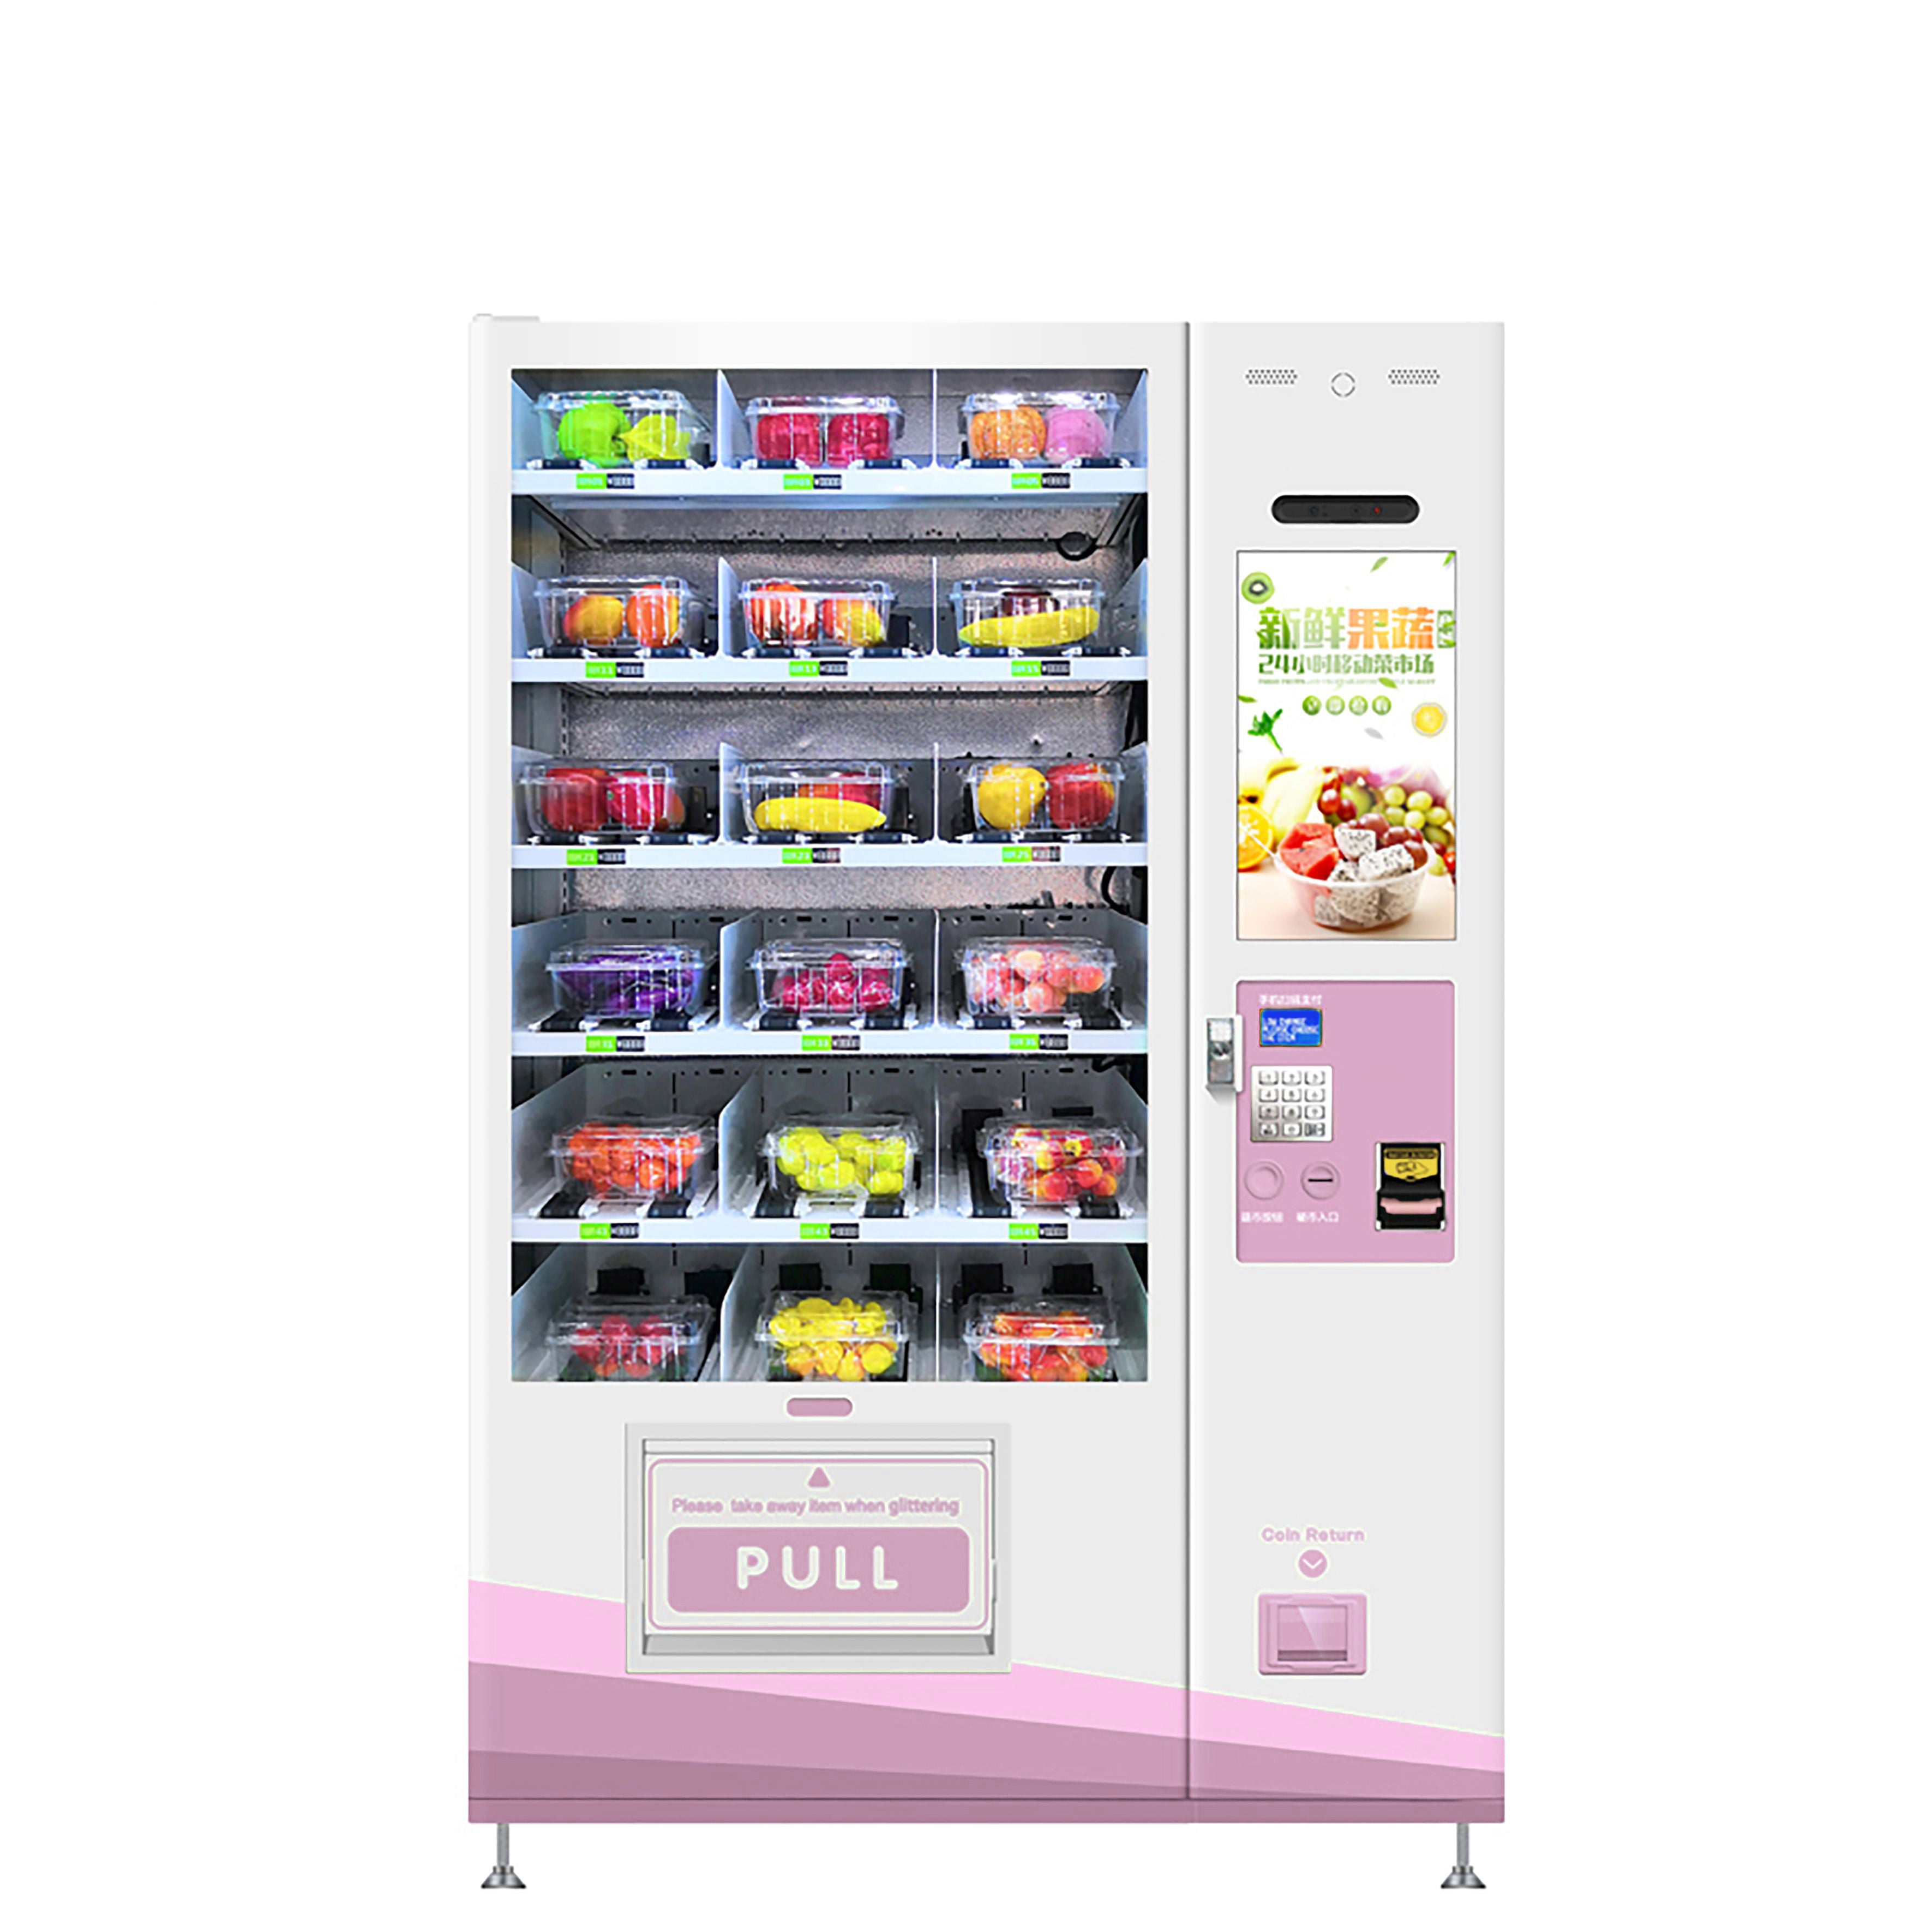 22” Touchscreen Vending Machine